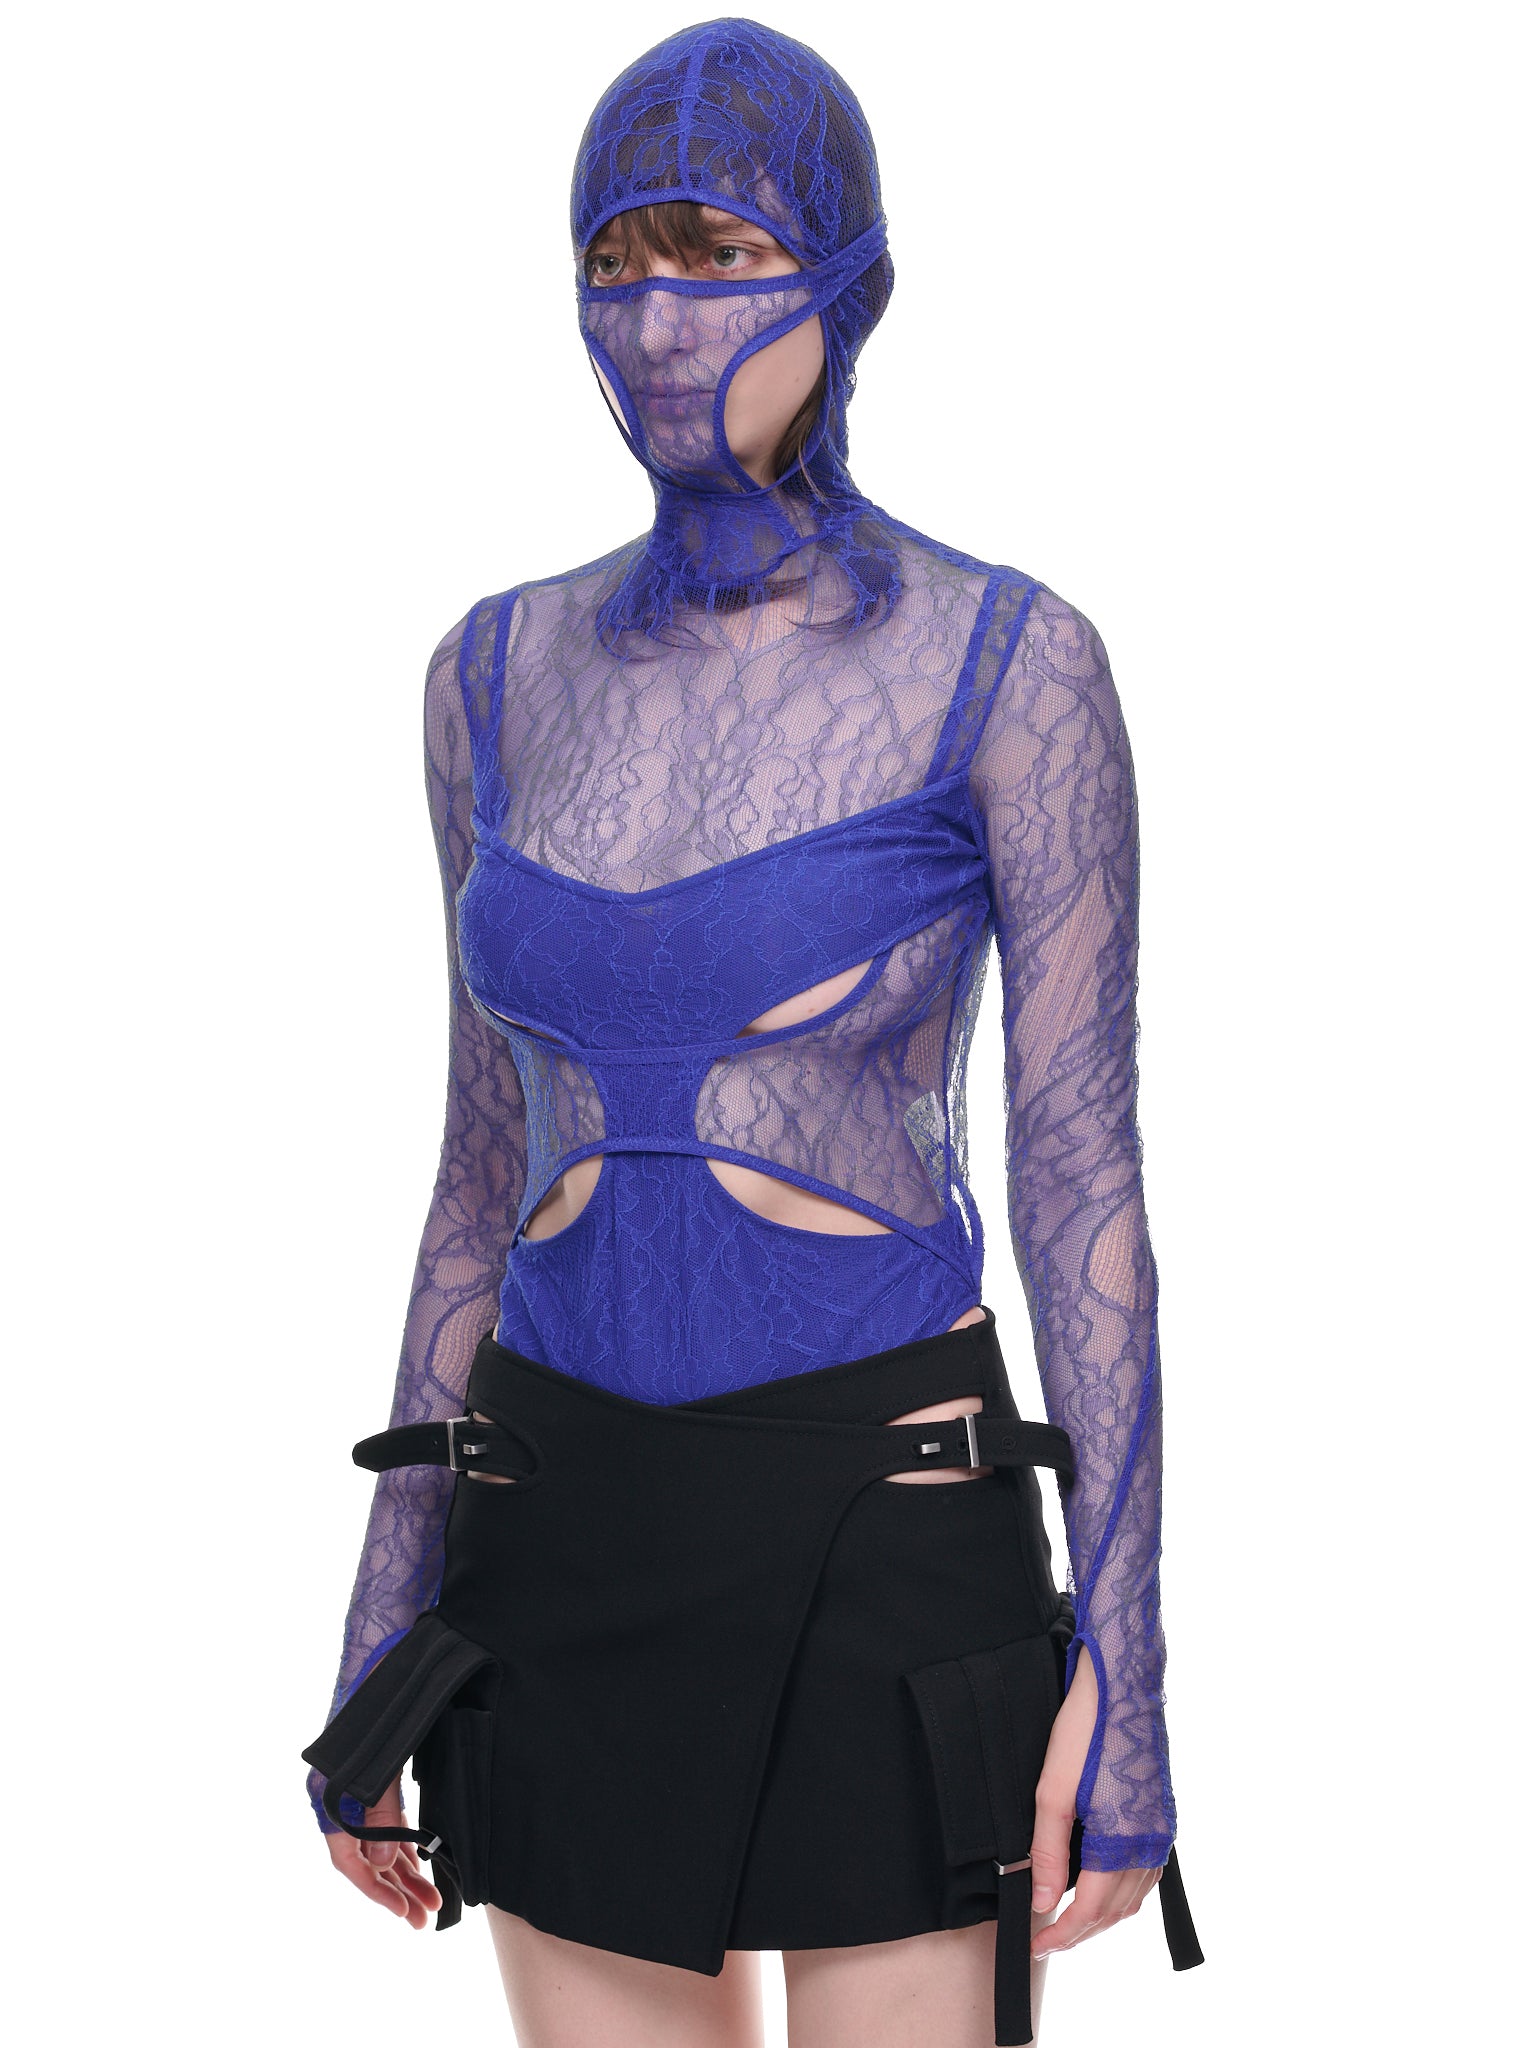 Visceral Lace Masked Bodysuit (A9873-BLUEPRINT)